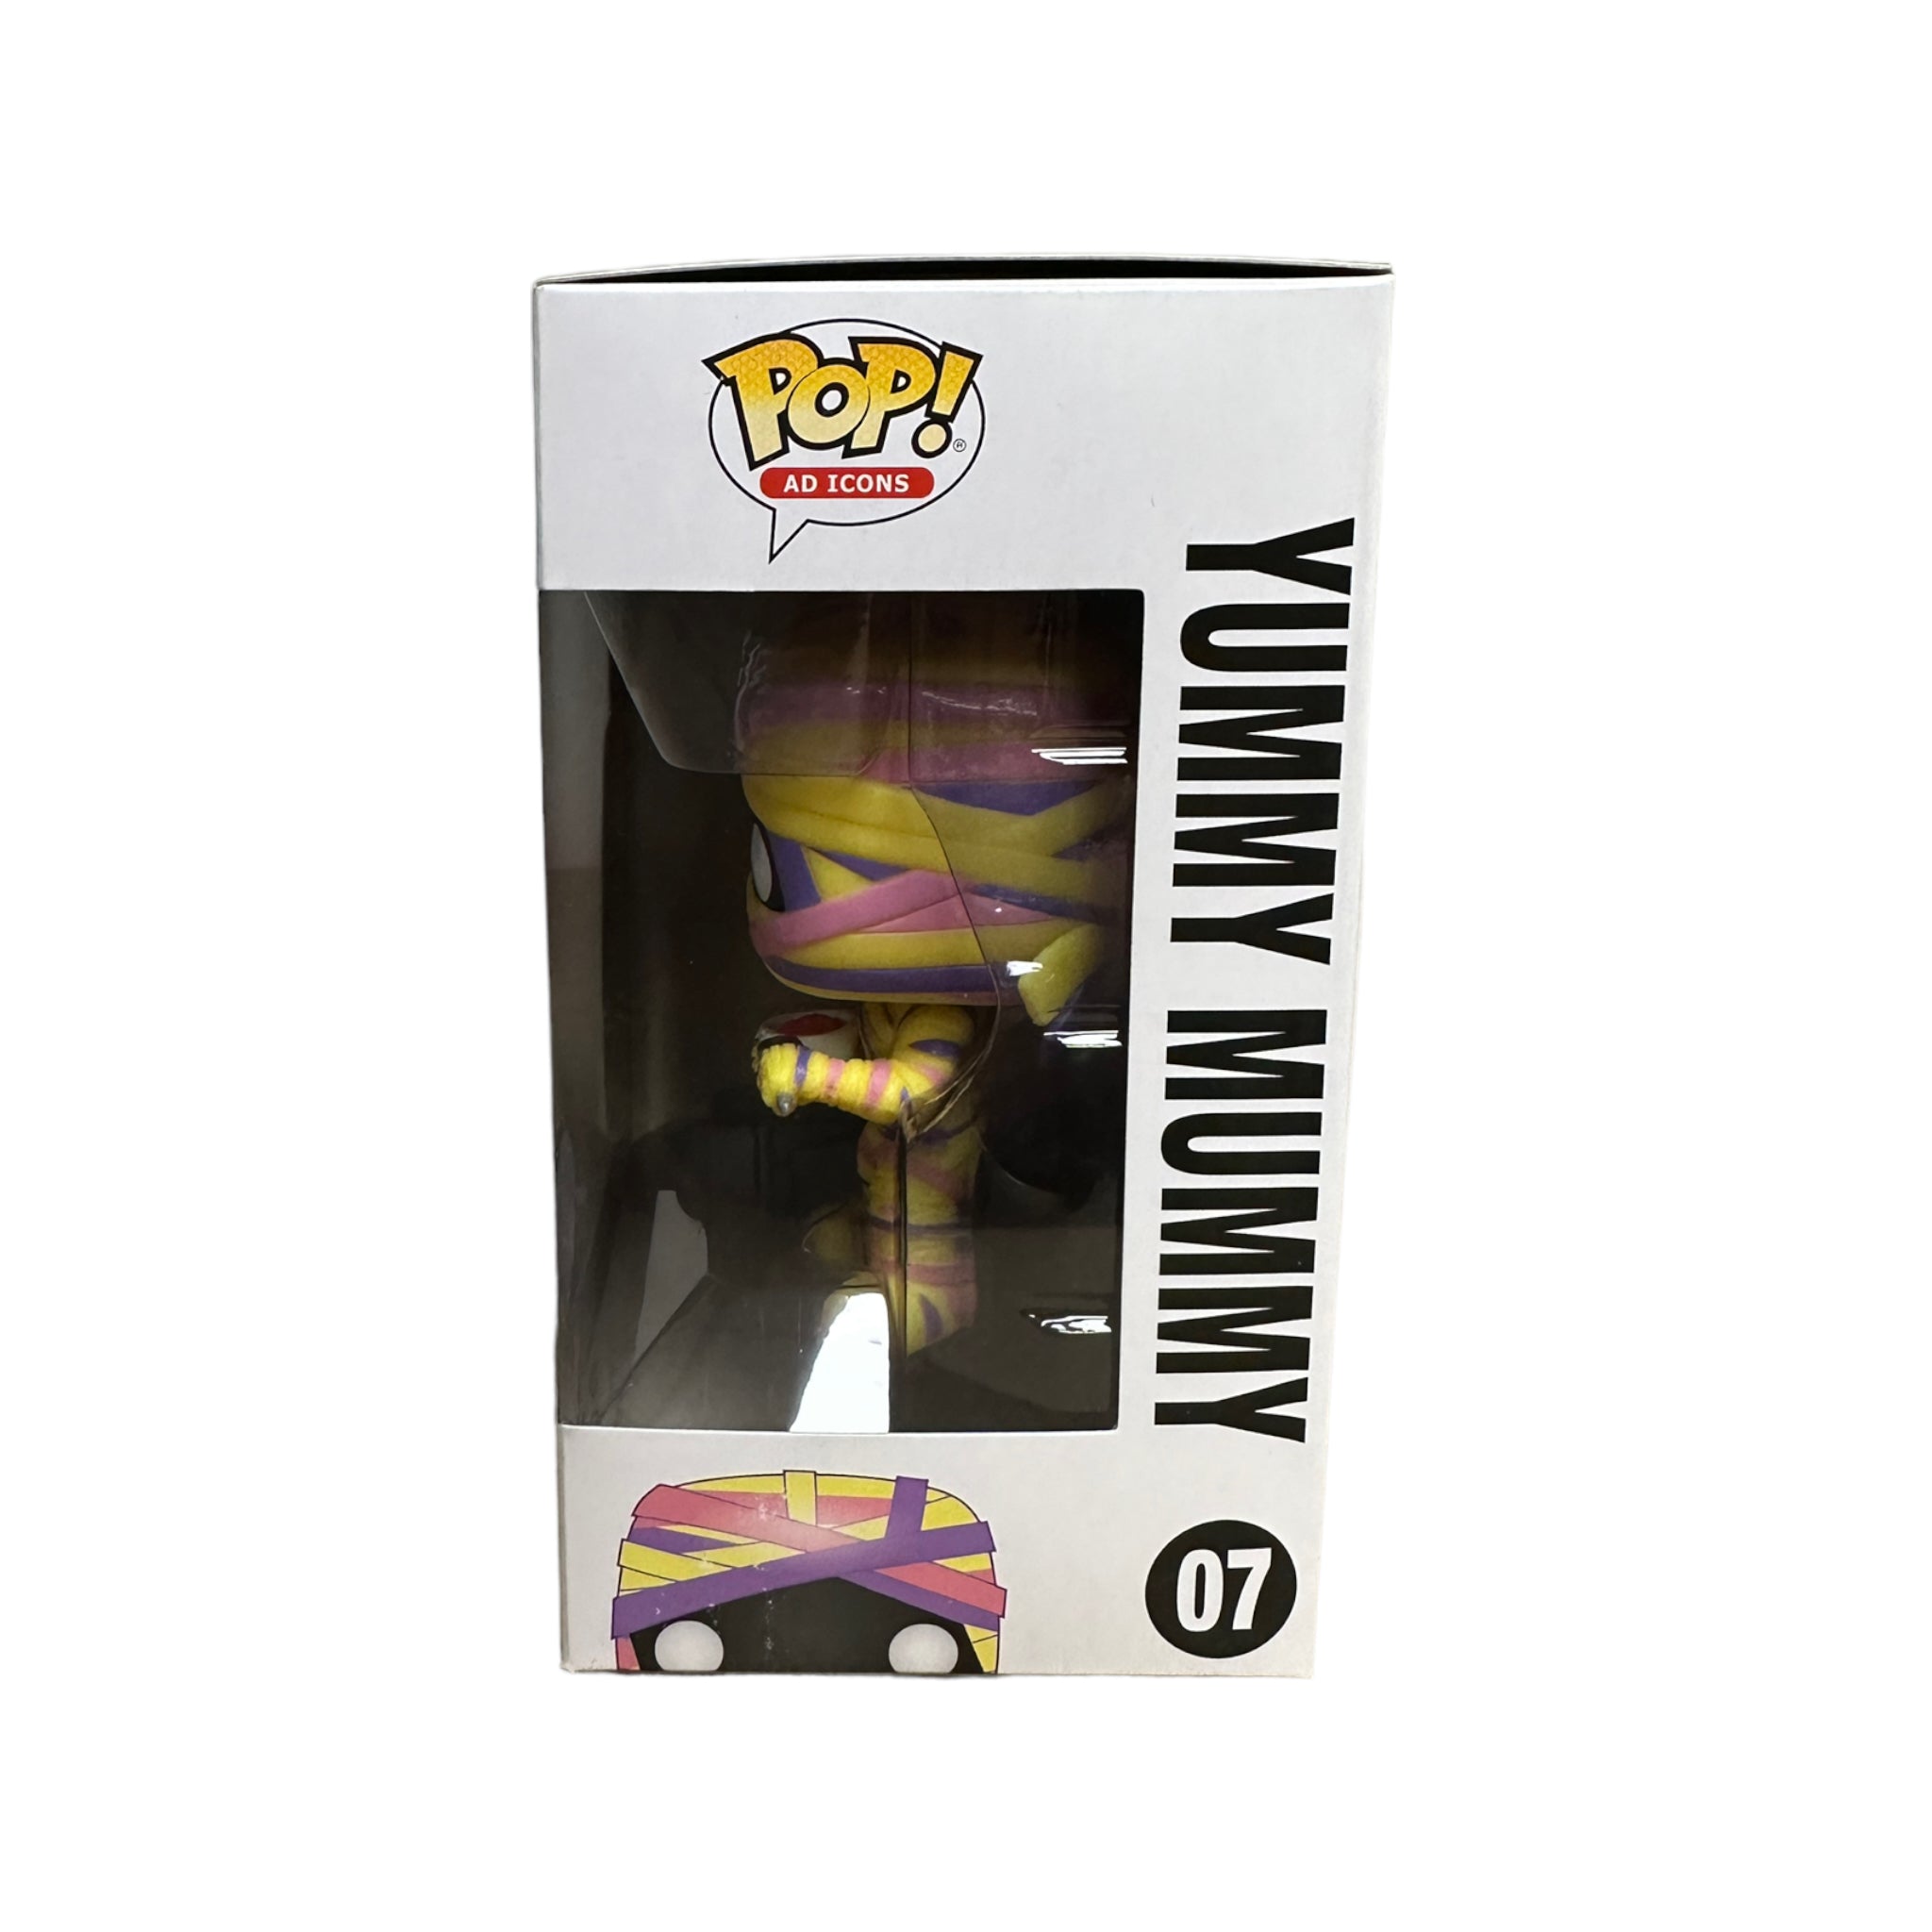 Yummy Mummy #07 Funko Pop! - Ad Icons - Funko Shop Exclusive LE2500 Pcs - Condition 8.5/10